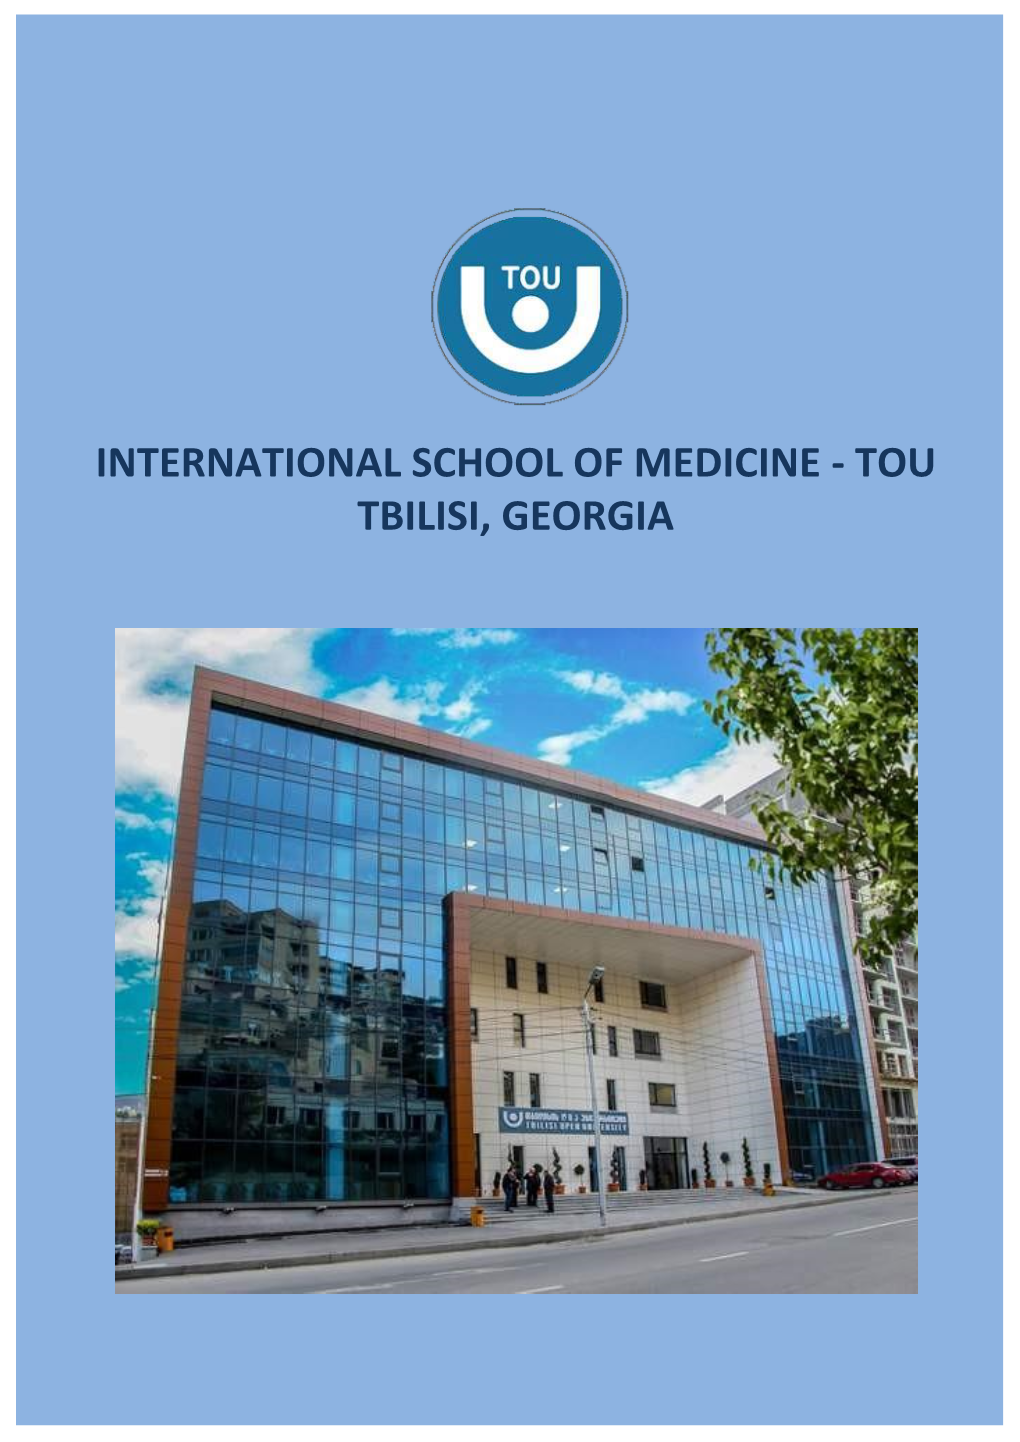 International School of Medicine -Tou Tbilisi, Georgia